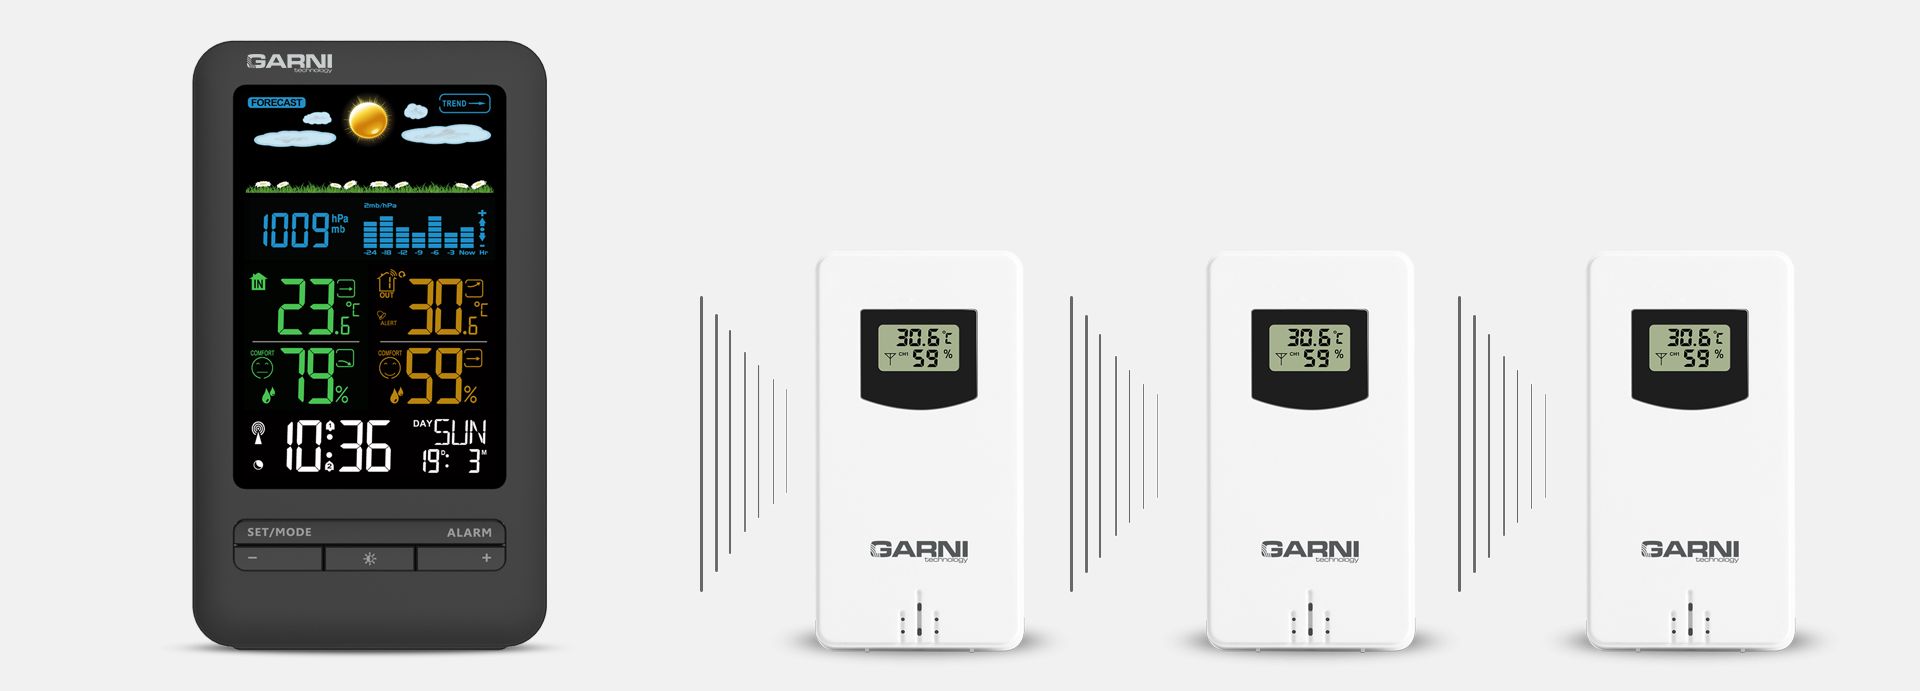 Option to connect additional wireless sensors GARNI 291 Line